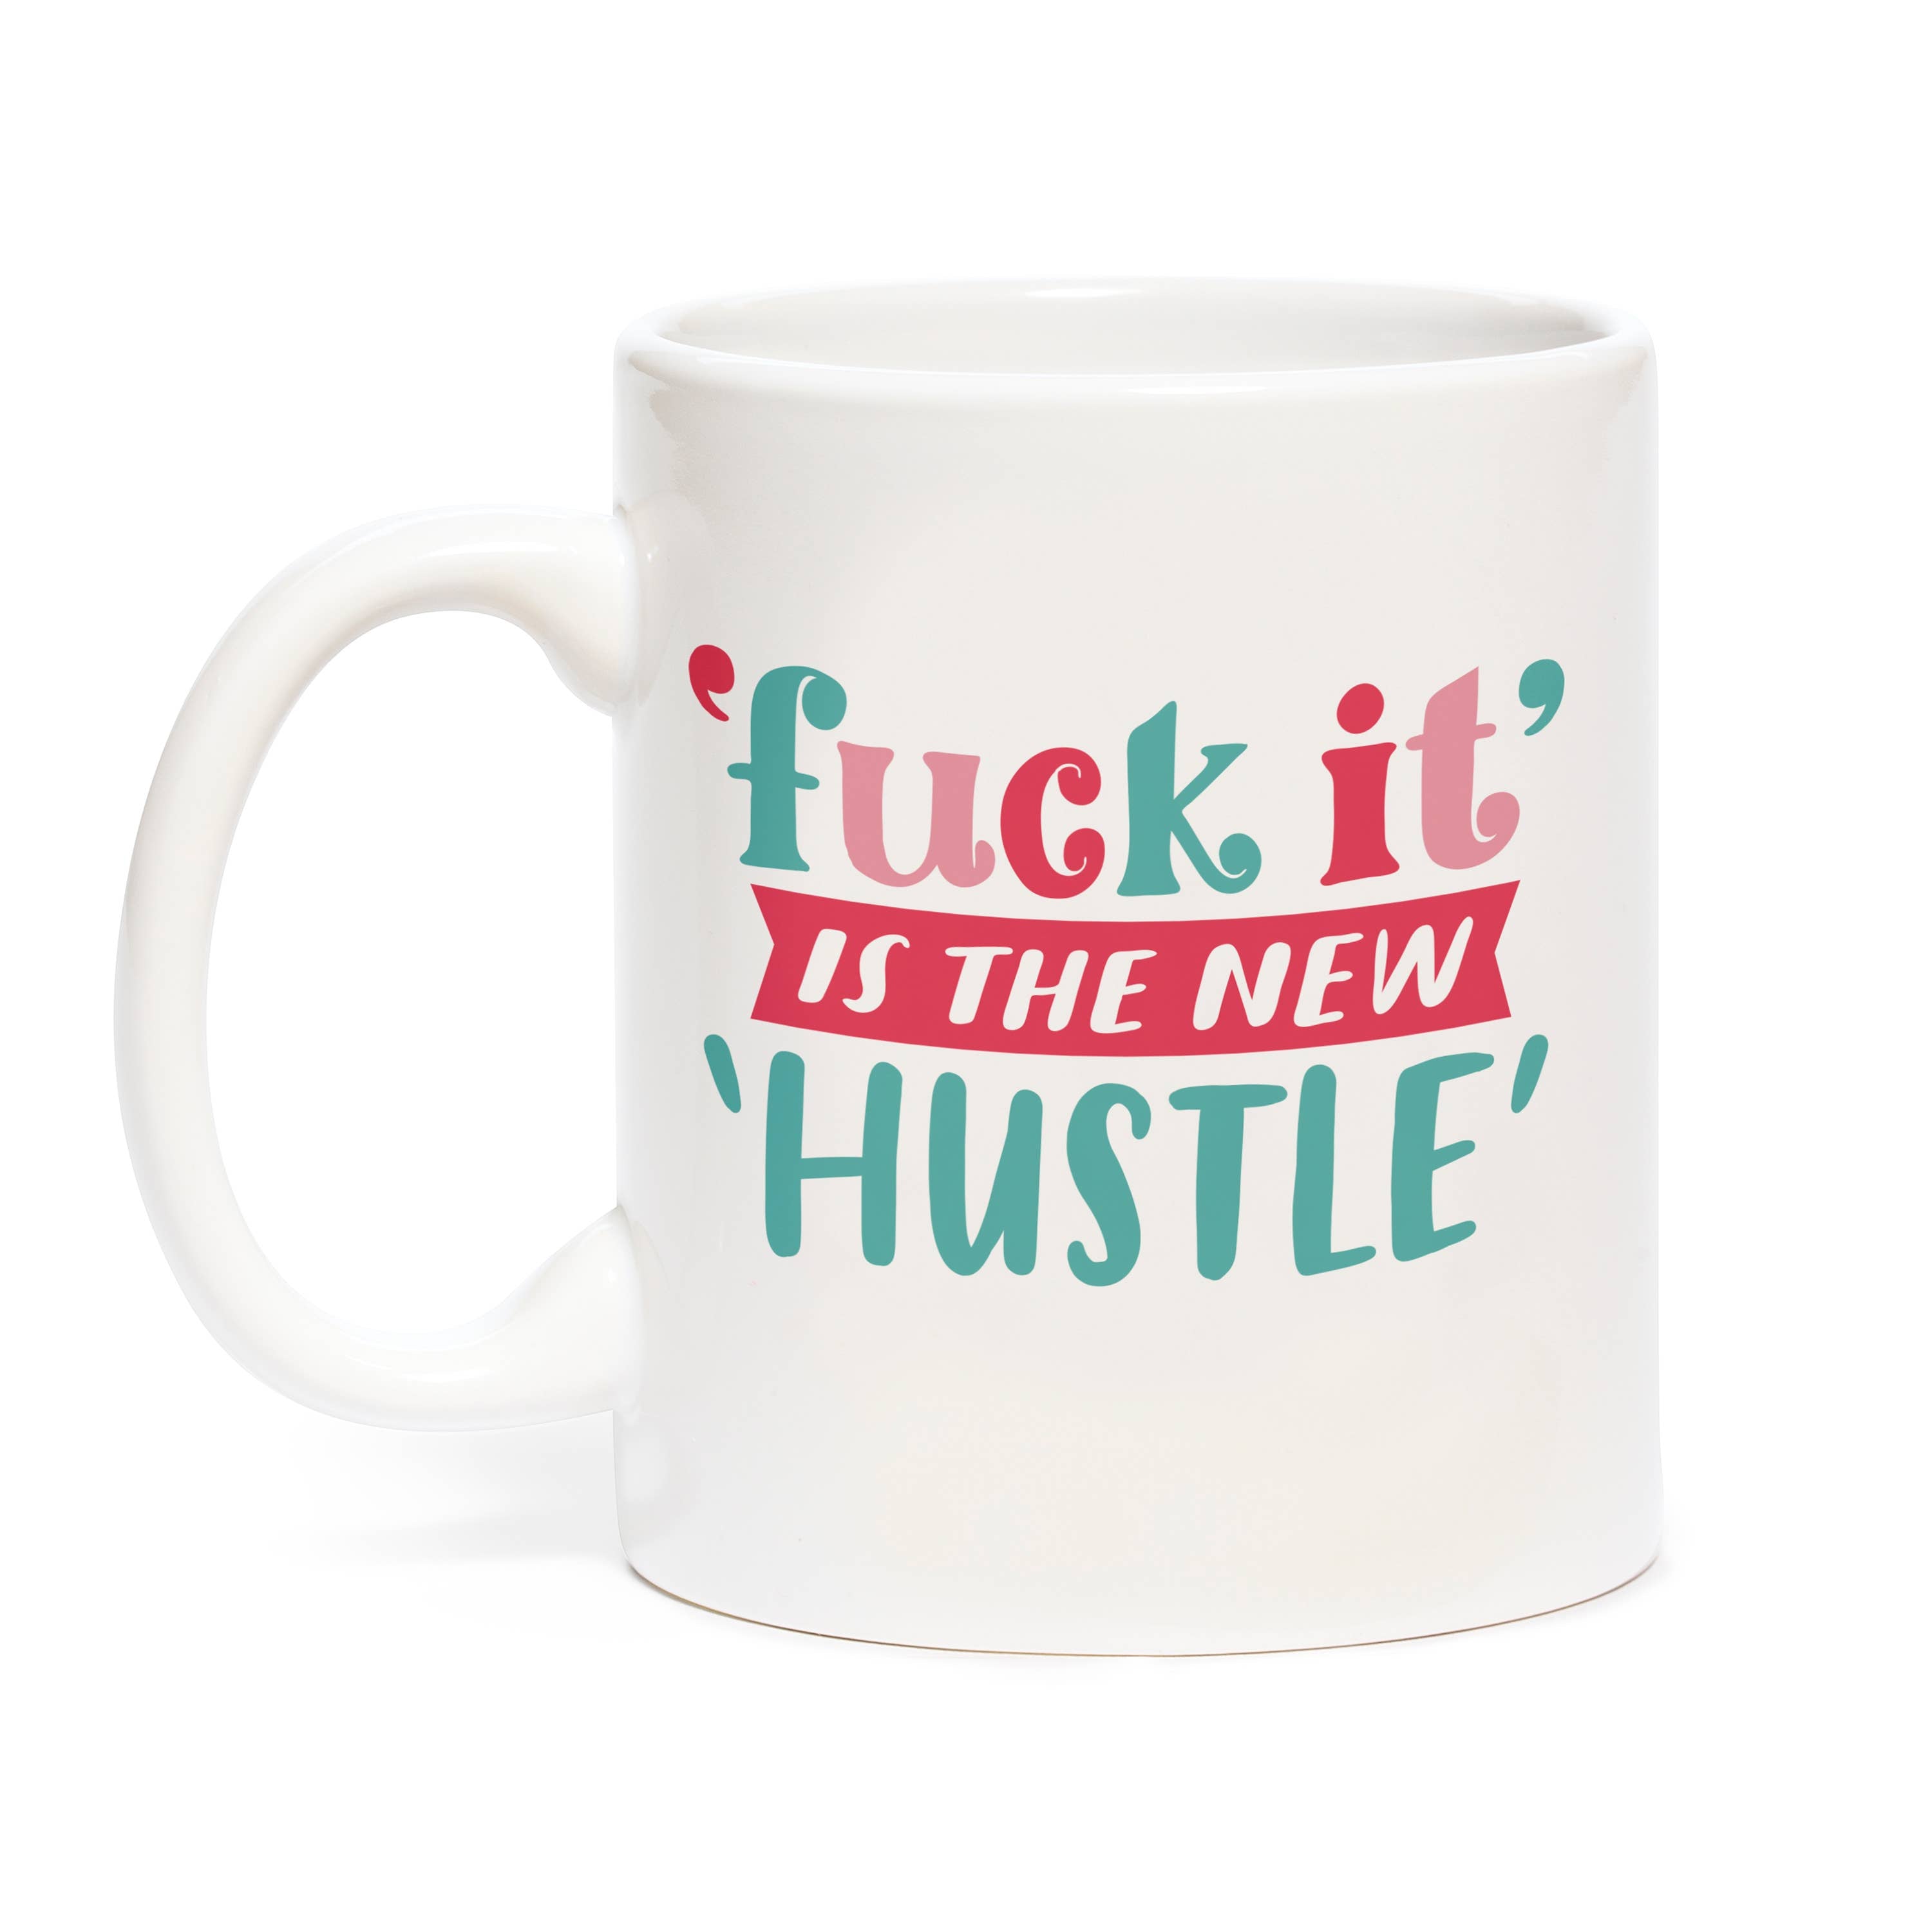 F*ck It is the New Hustle Mug